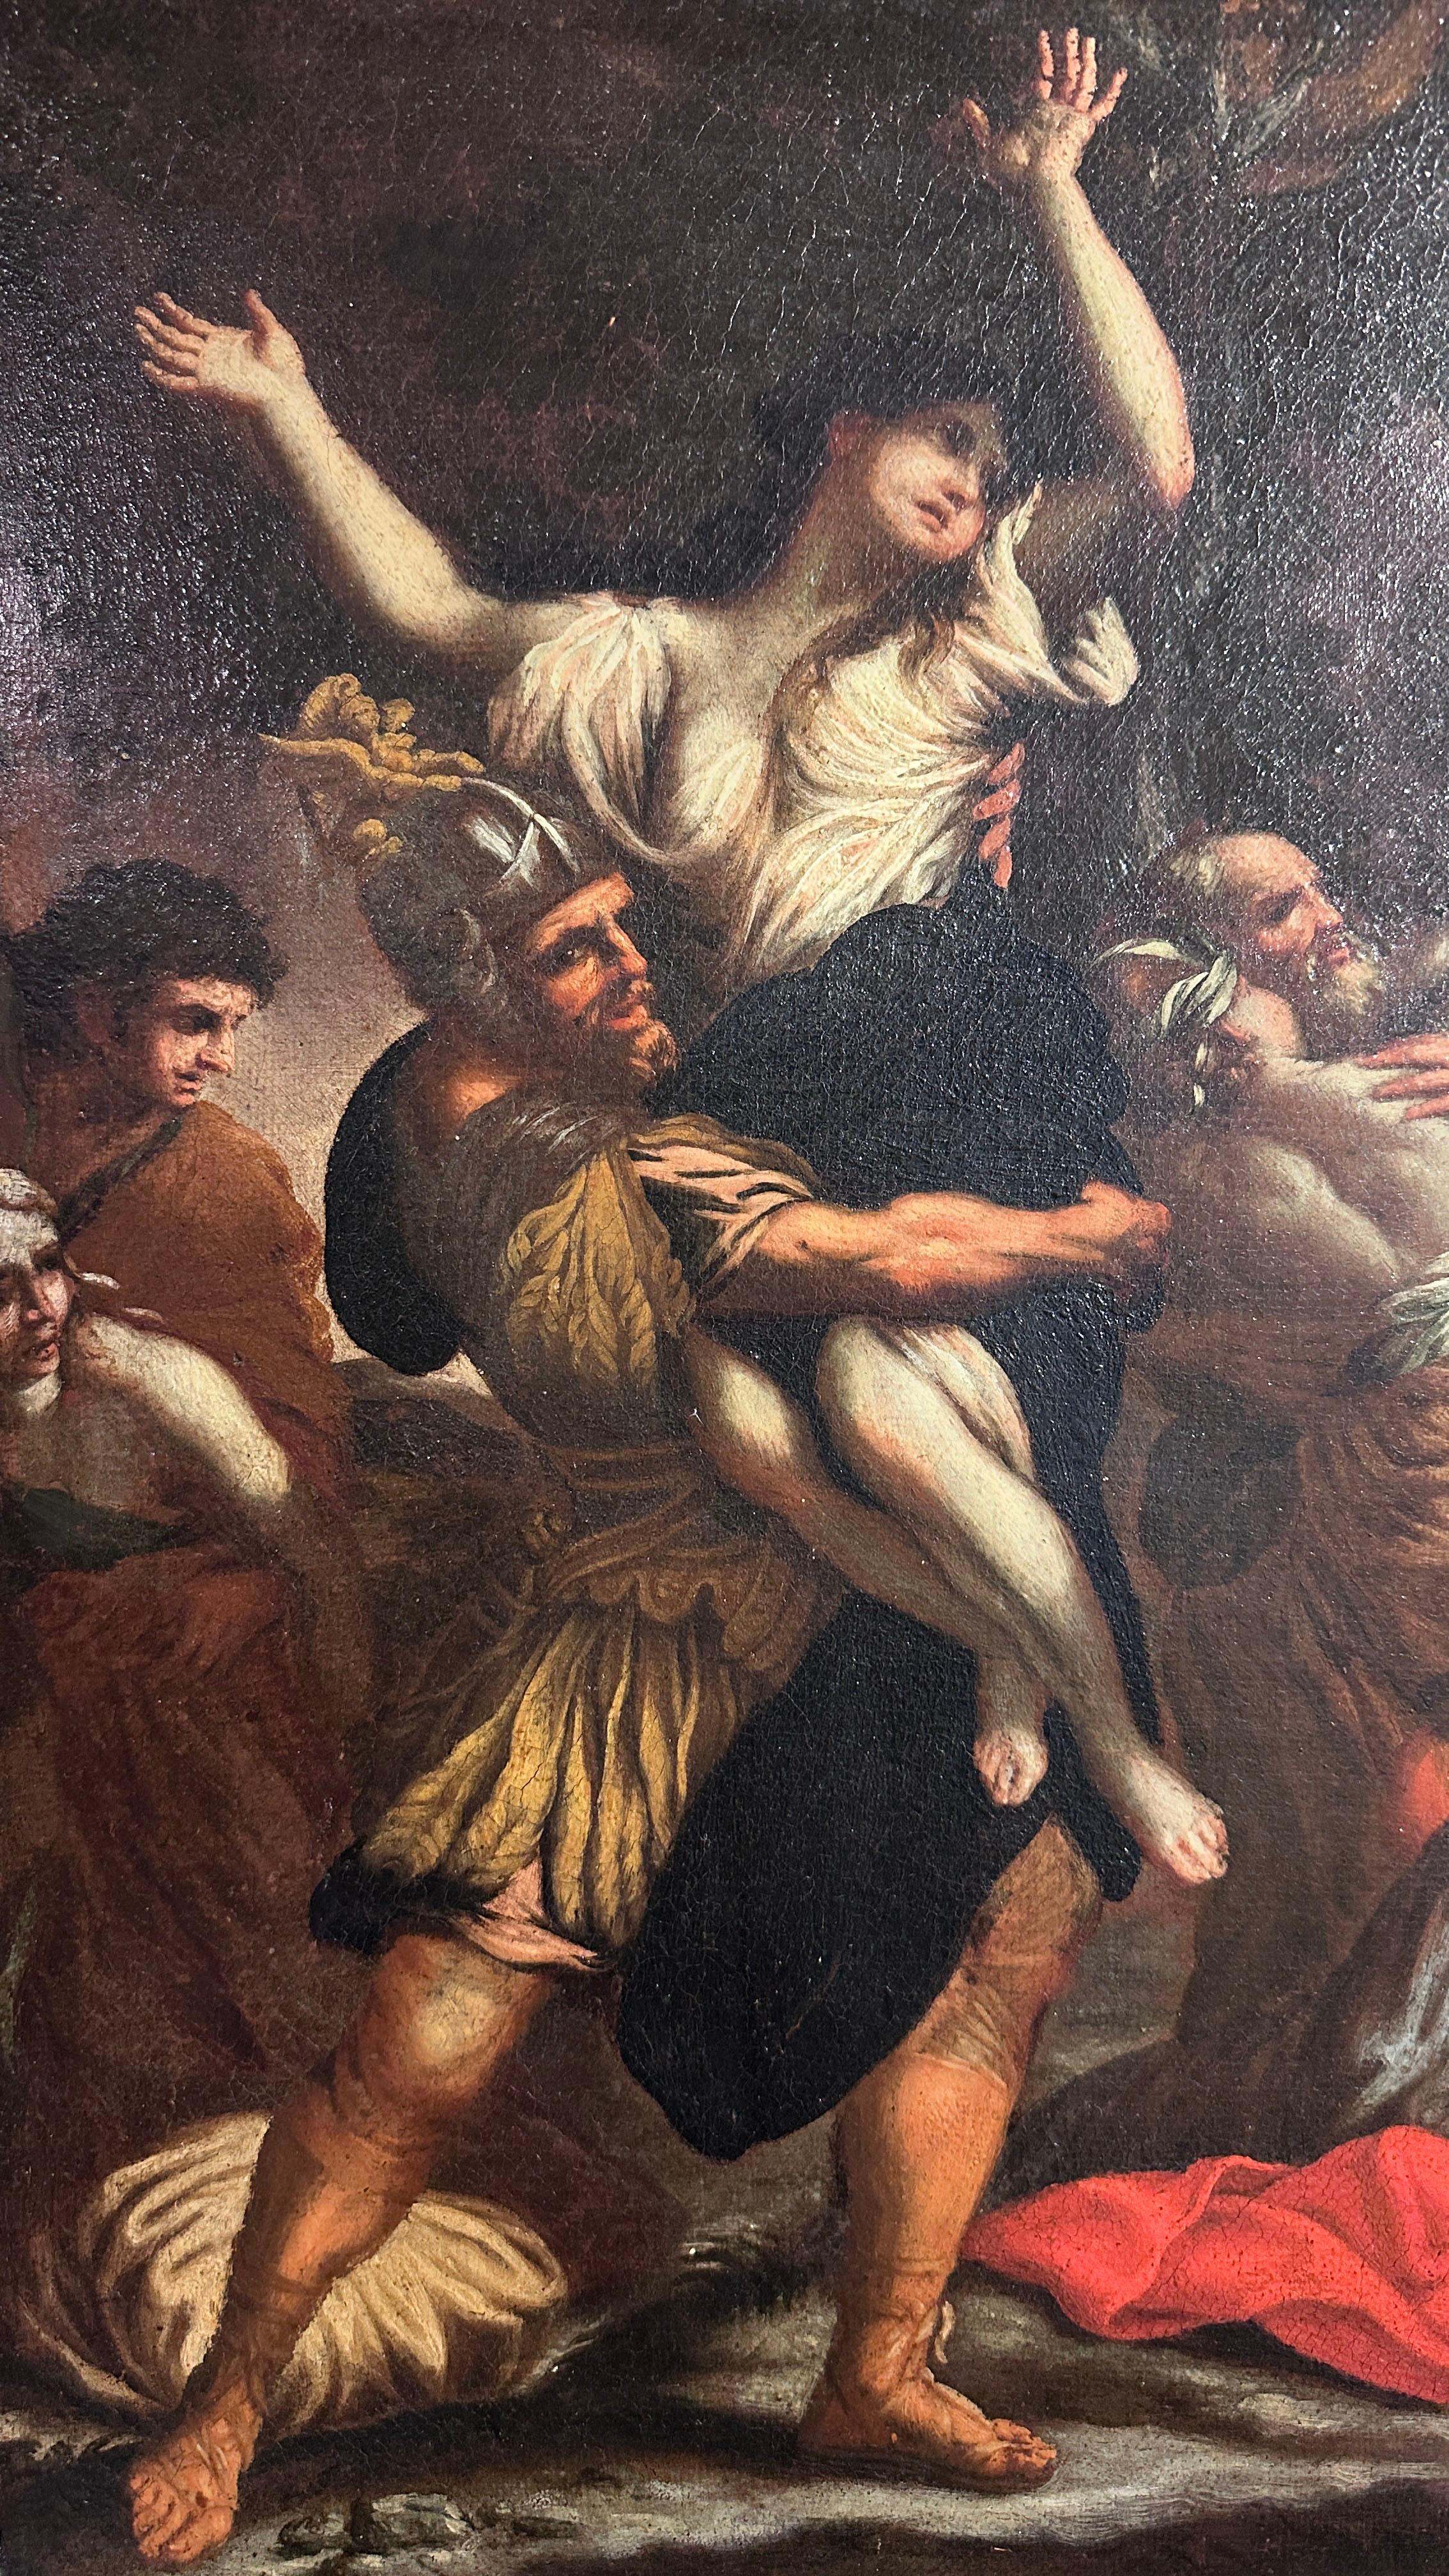 Oiled 17th CENTURY PIETRO DA CORTONA'S PAINTING THE RAPE OF THE SABINE WOMEN For Sale